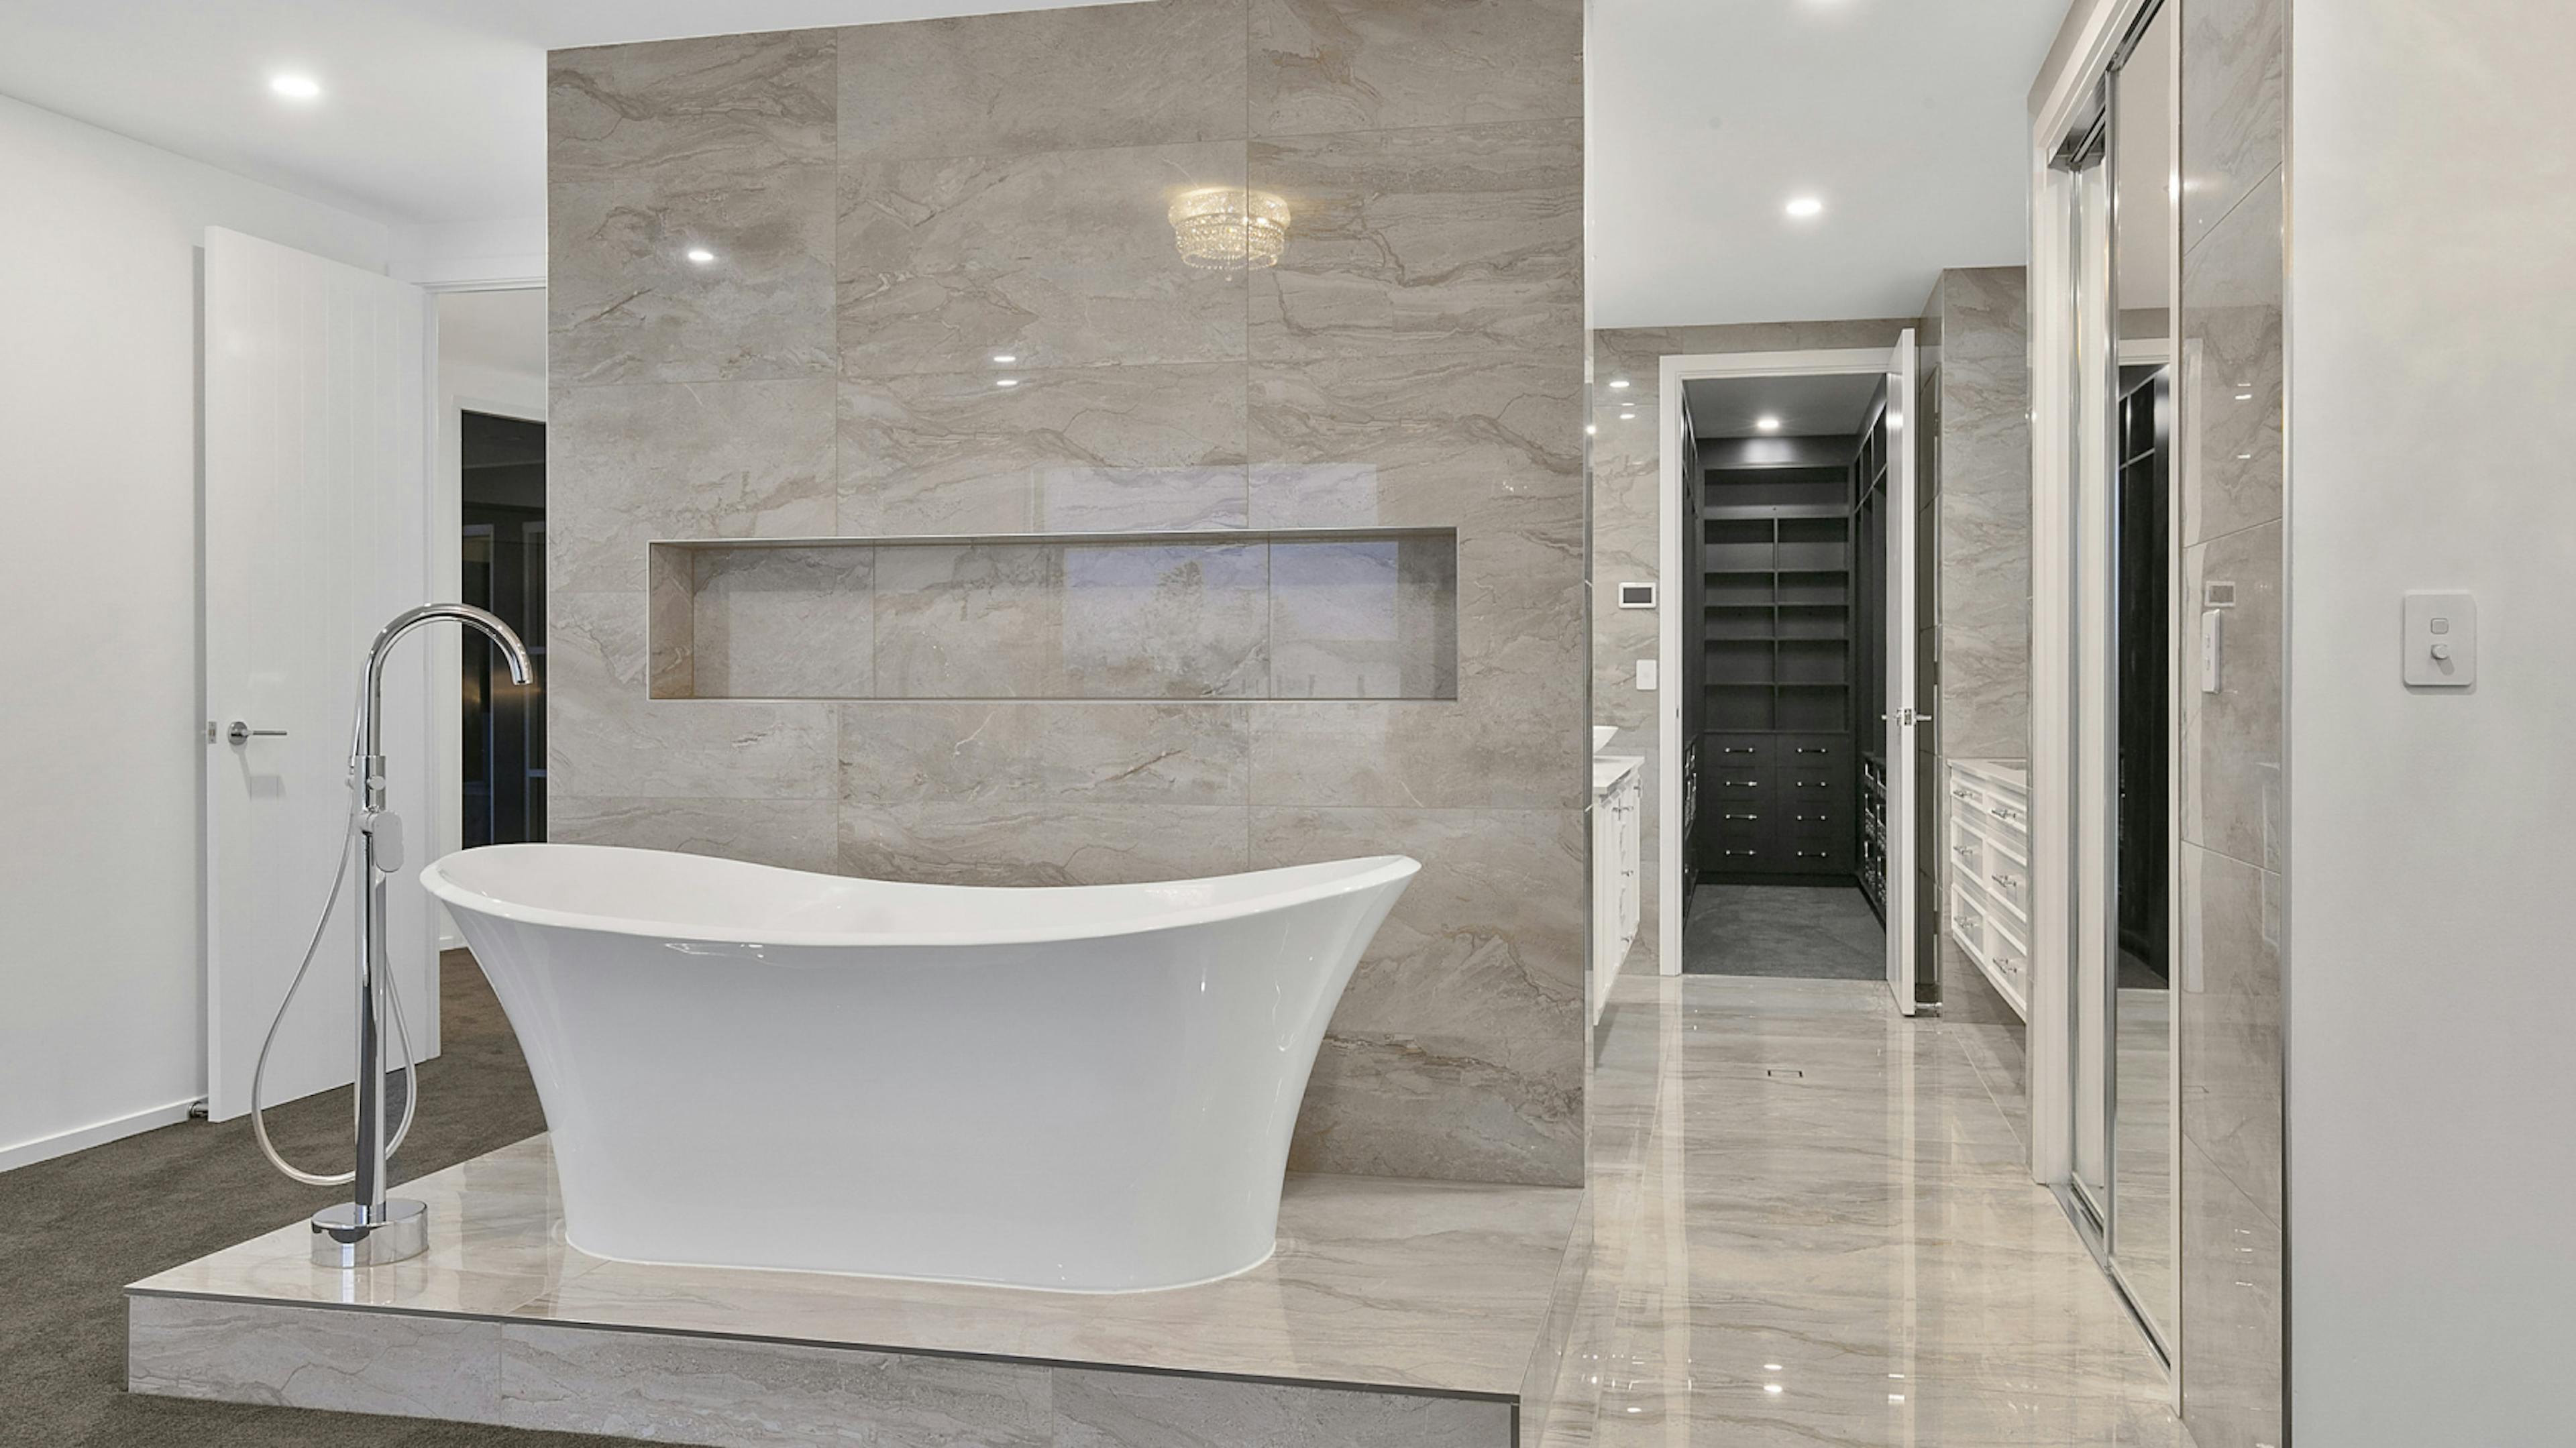 A modern, luxurious bathroom remodelling including high end bathtub done by Streamline Cabinets.